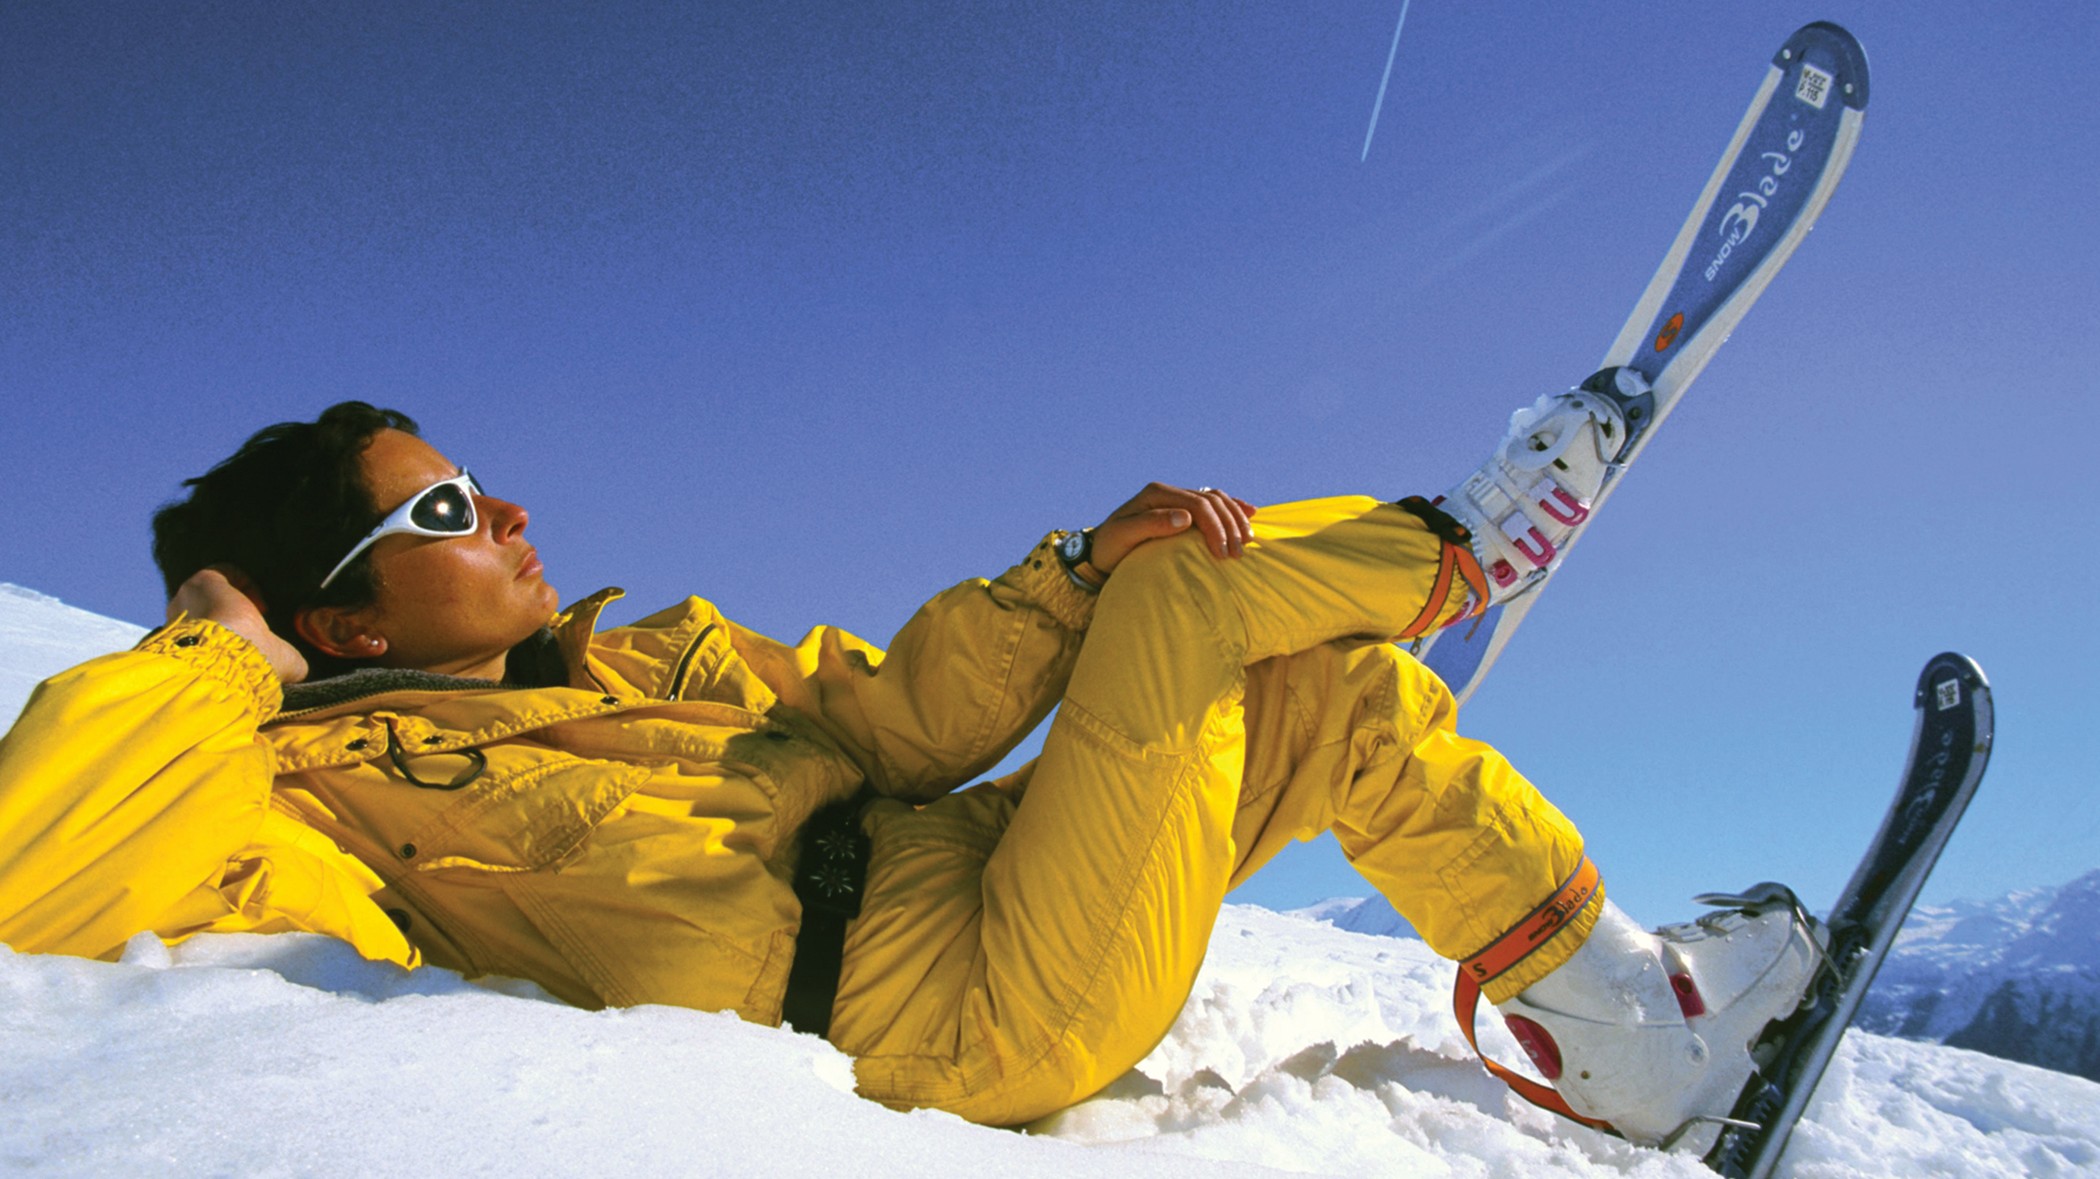 Cartoonish, Impractical, Dumb: The Controversial Ascent of Snowblading